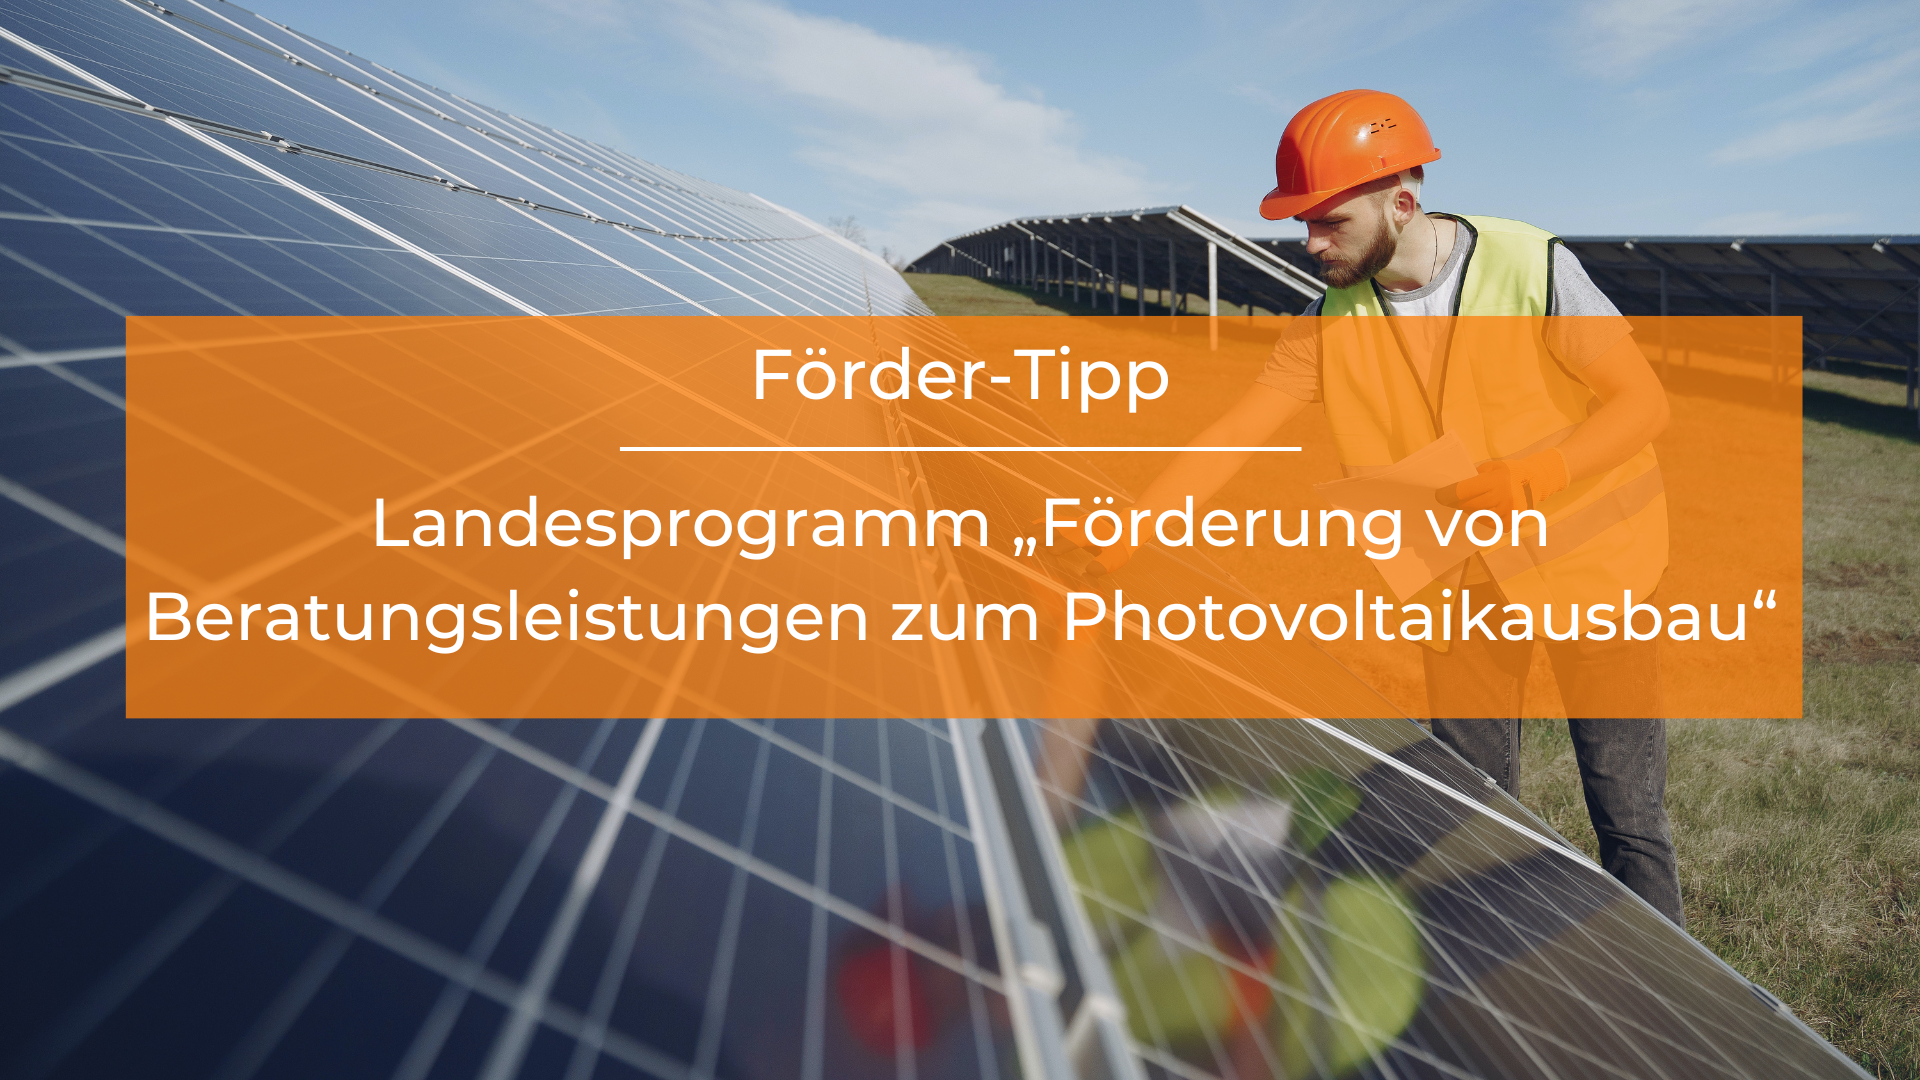 Photovoltaikausbau Förder-Tipp